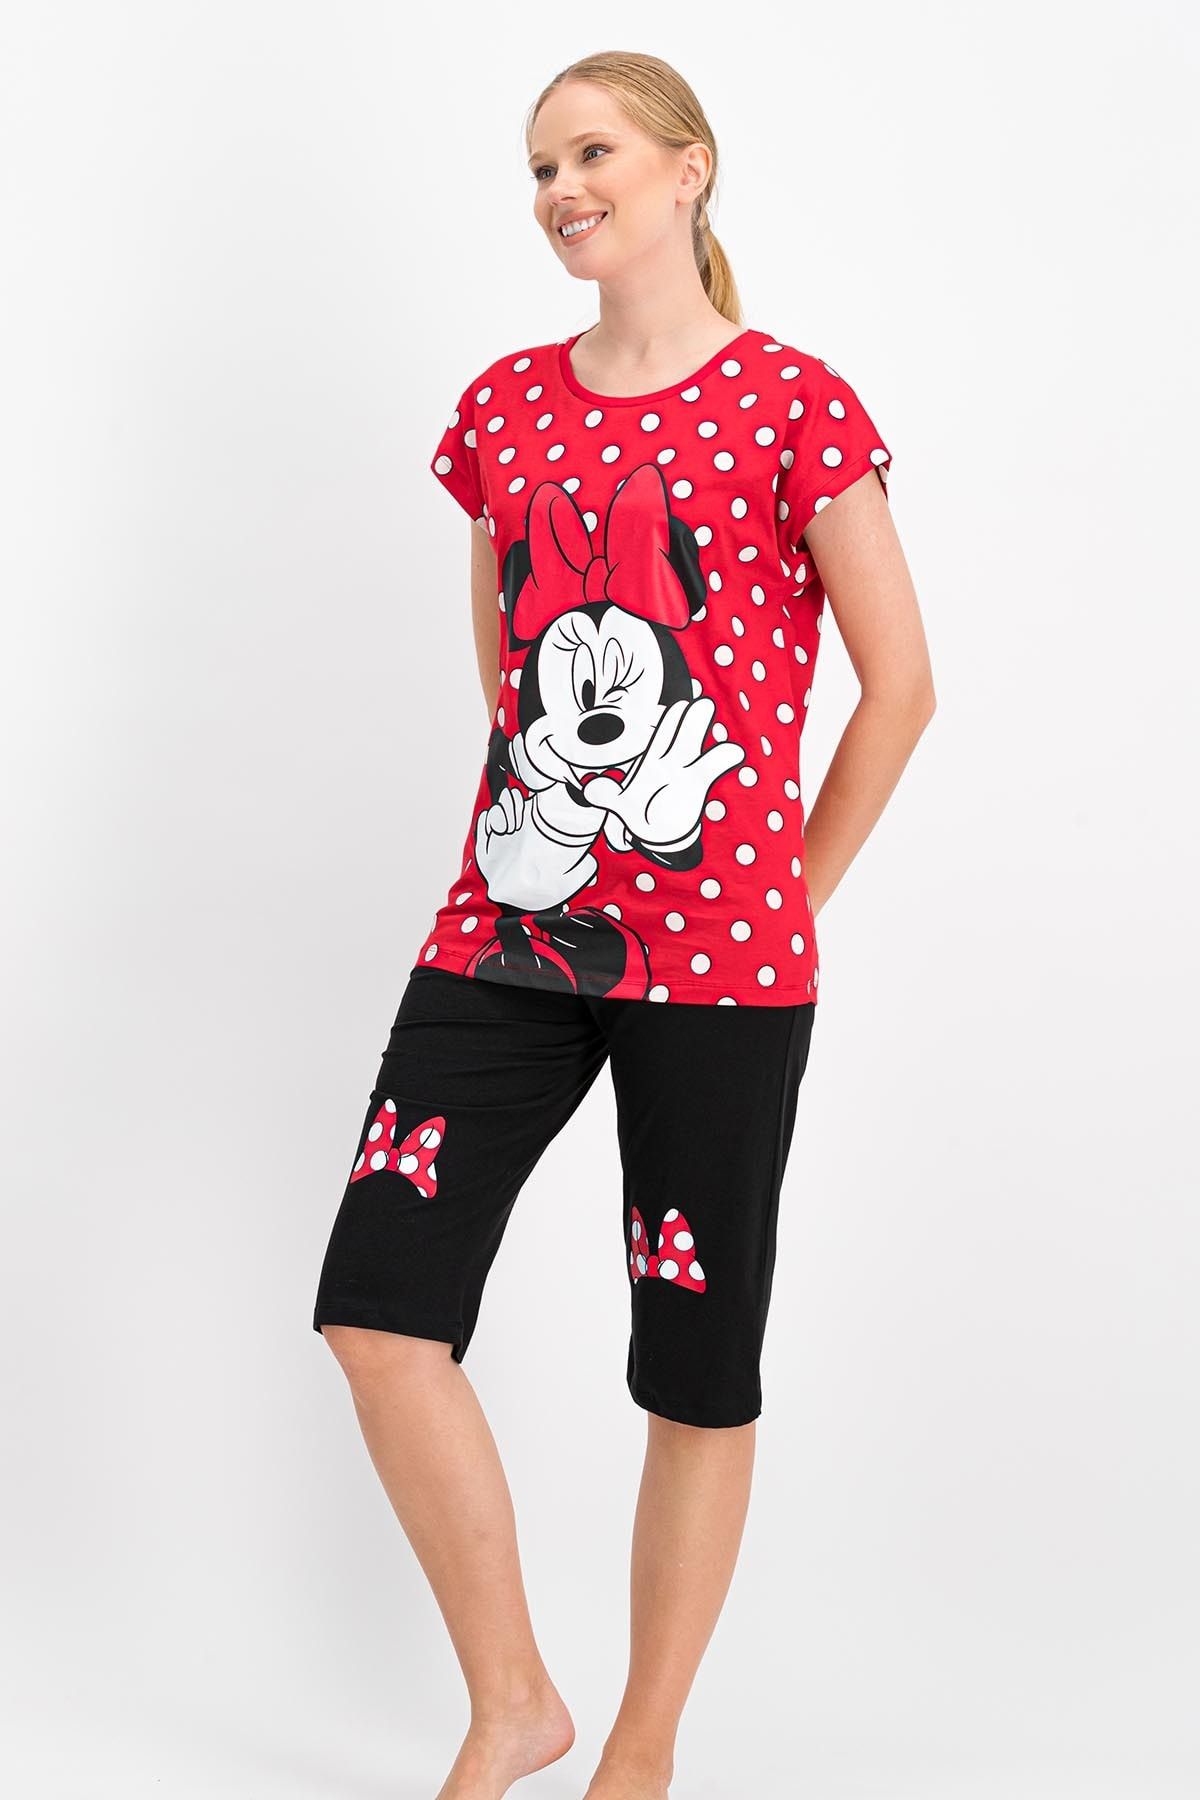 Mickey & Minnie Mouse Kadın Minnie Mouse Lisanslı Kırmızı Kapri Takım